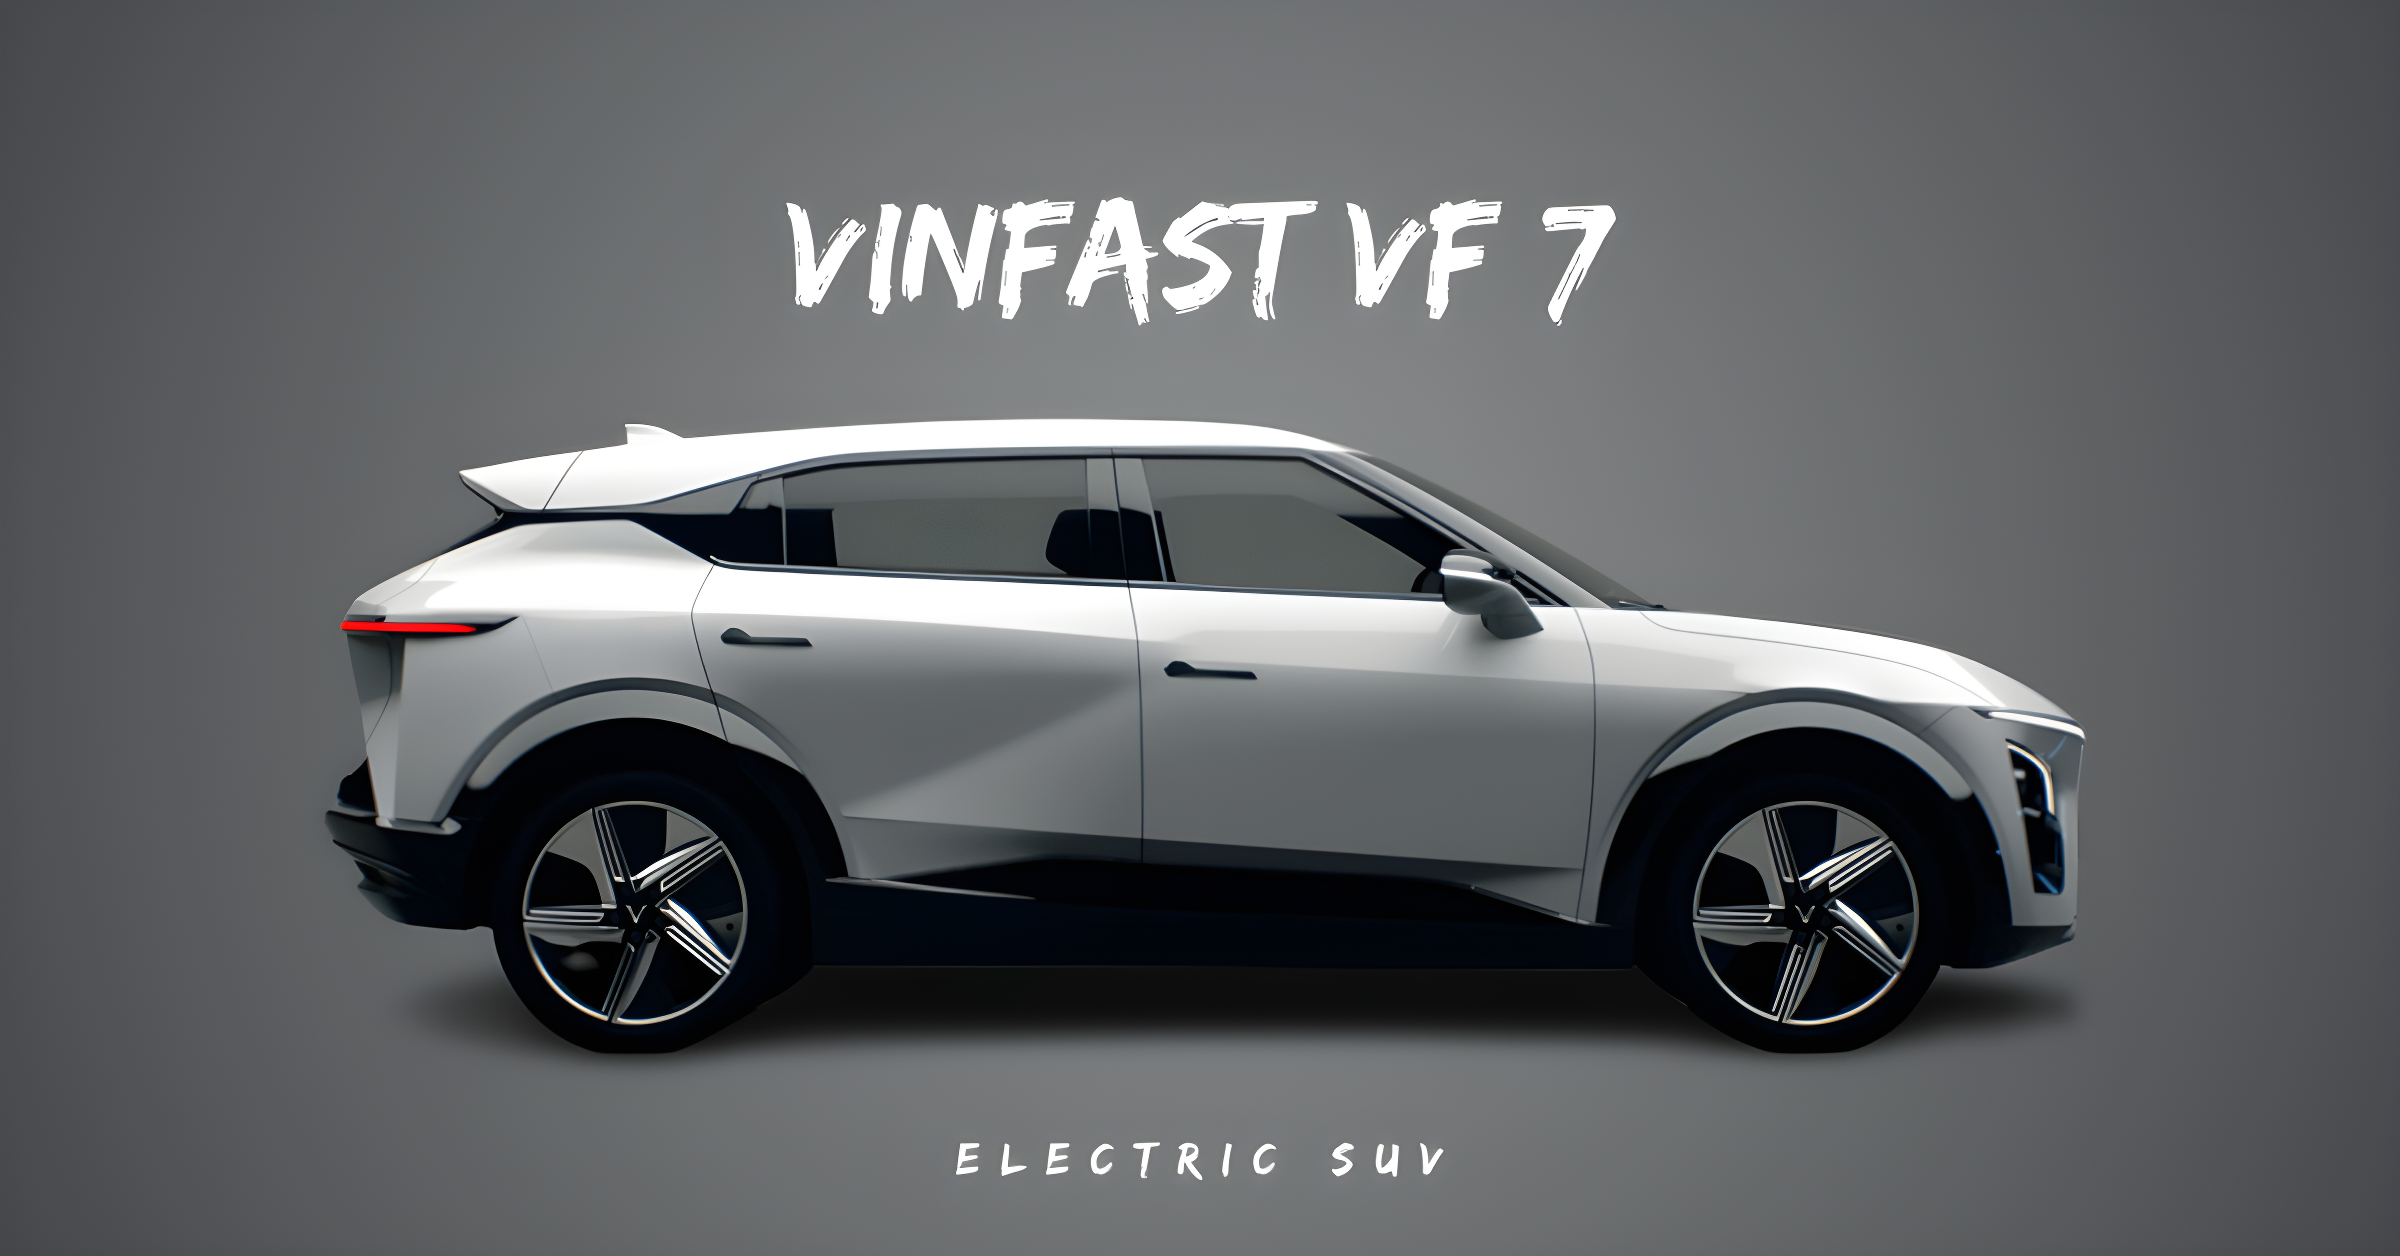 https://e-vehicleinfo.com/global/vinfast-vf-7-electric-suv/